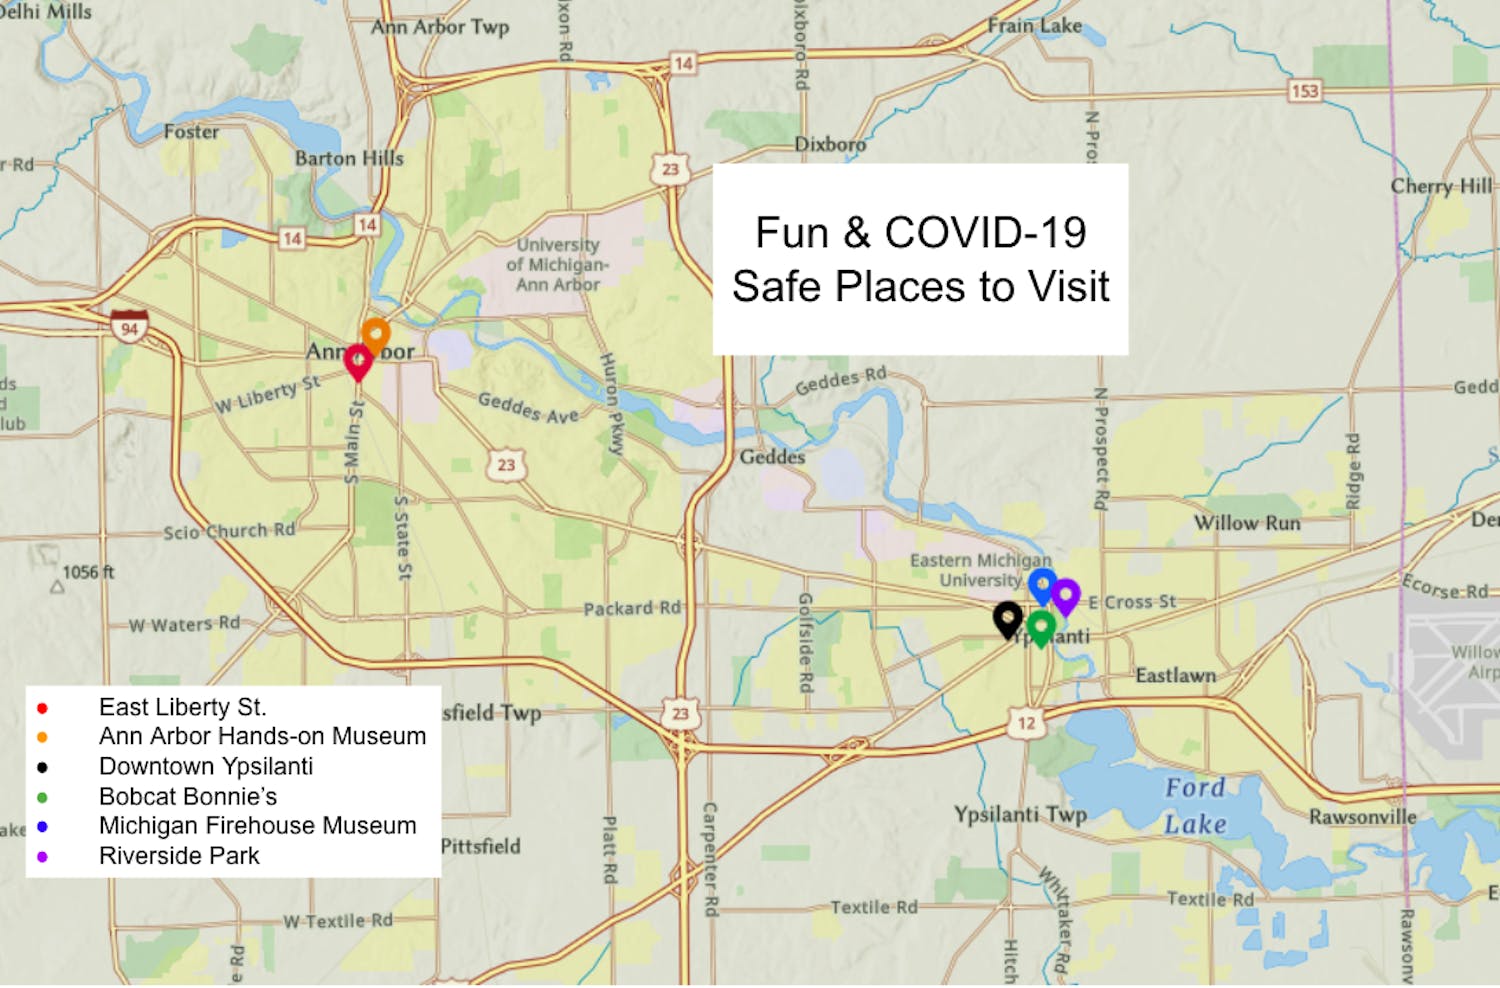 Fun & COVID-19 safe map